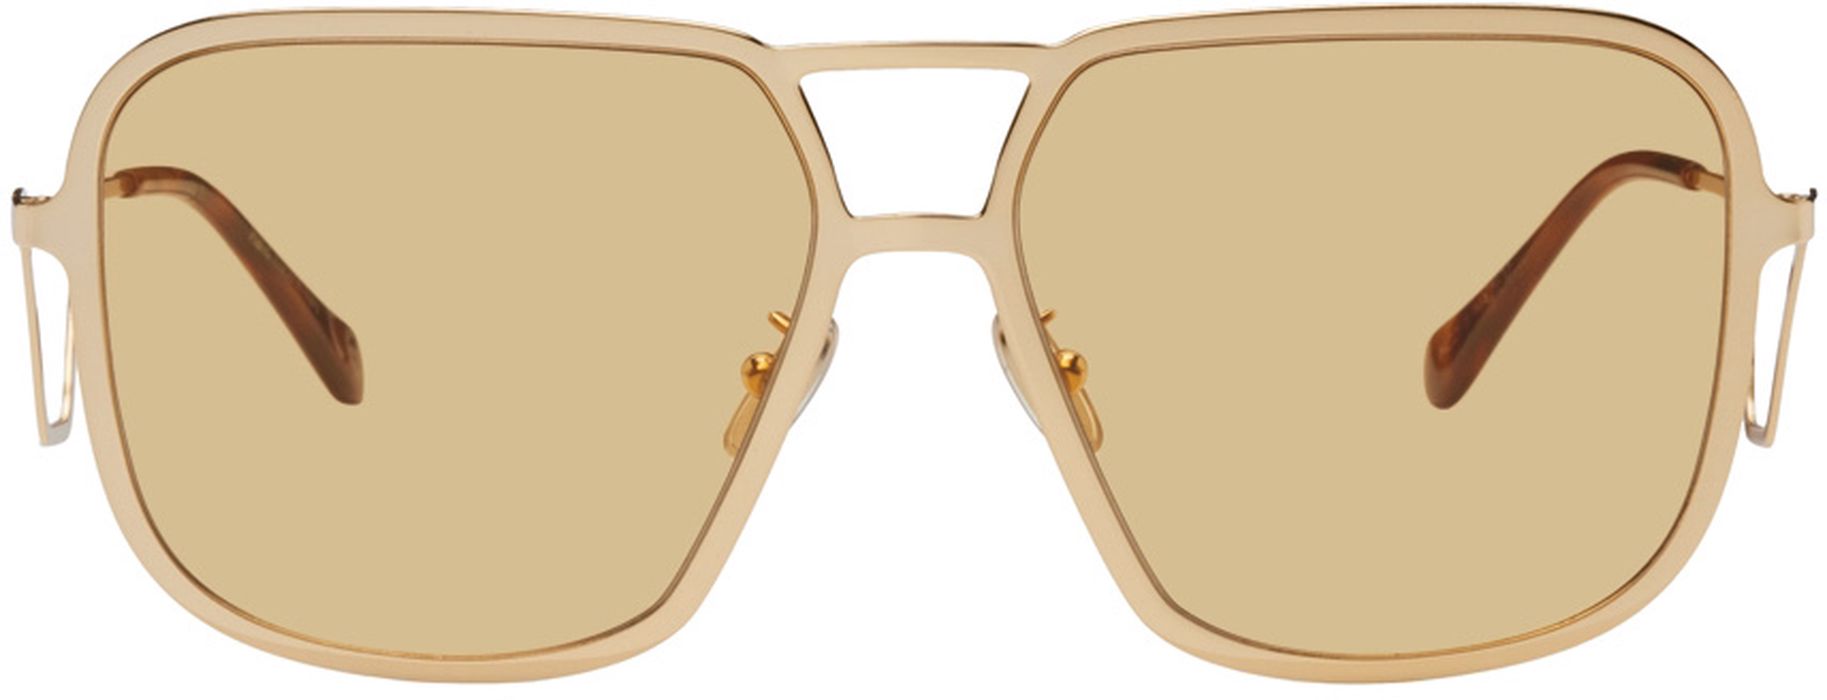 Marni Gold Ha Long Bay Sunglasses